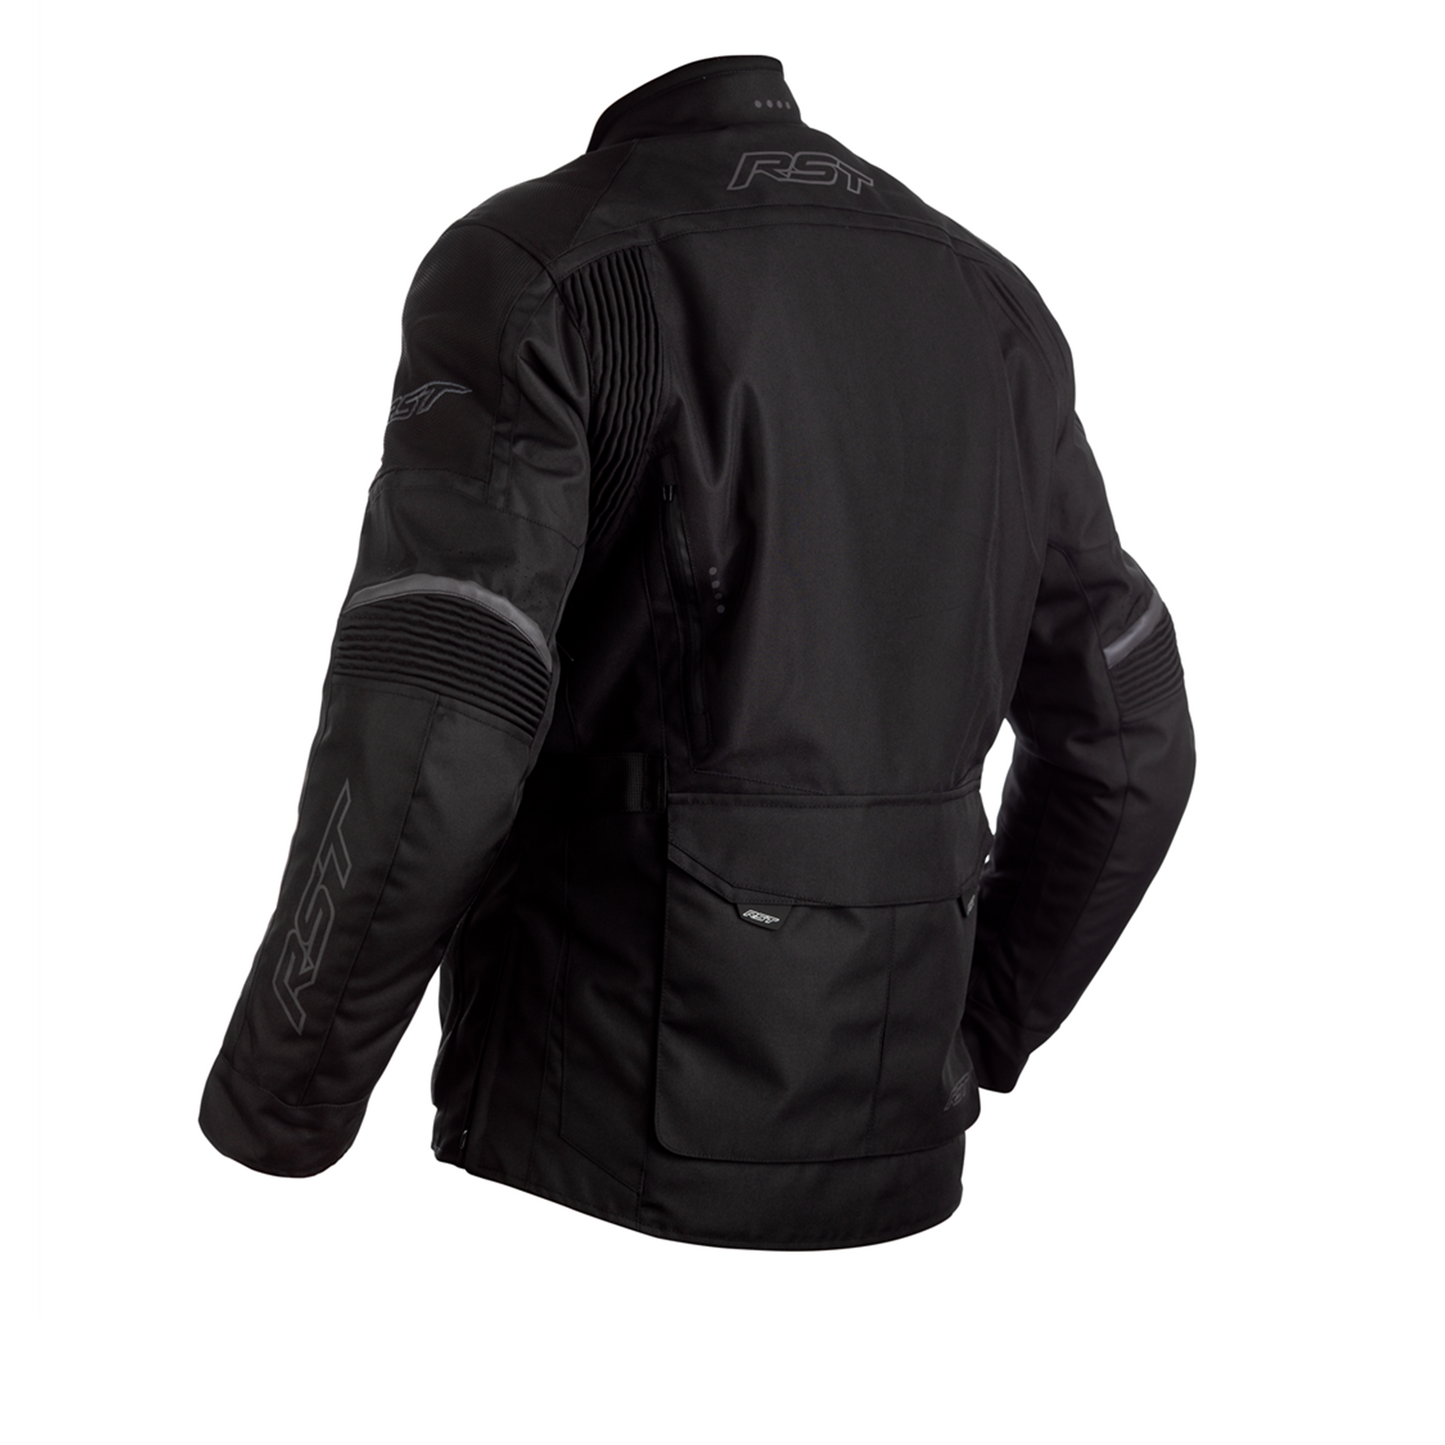 RST Maverick CE Ladies Textile Jacket - Black (2492)